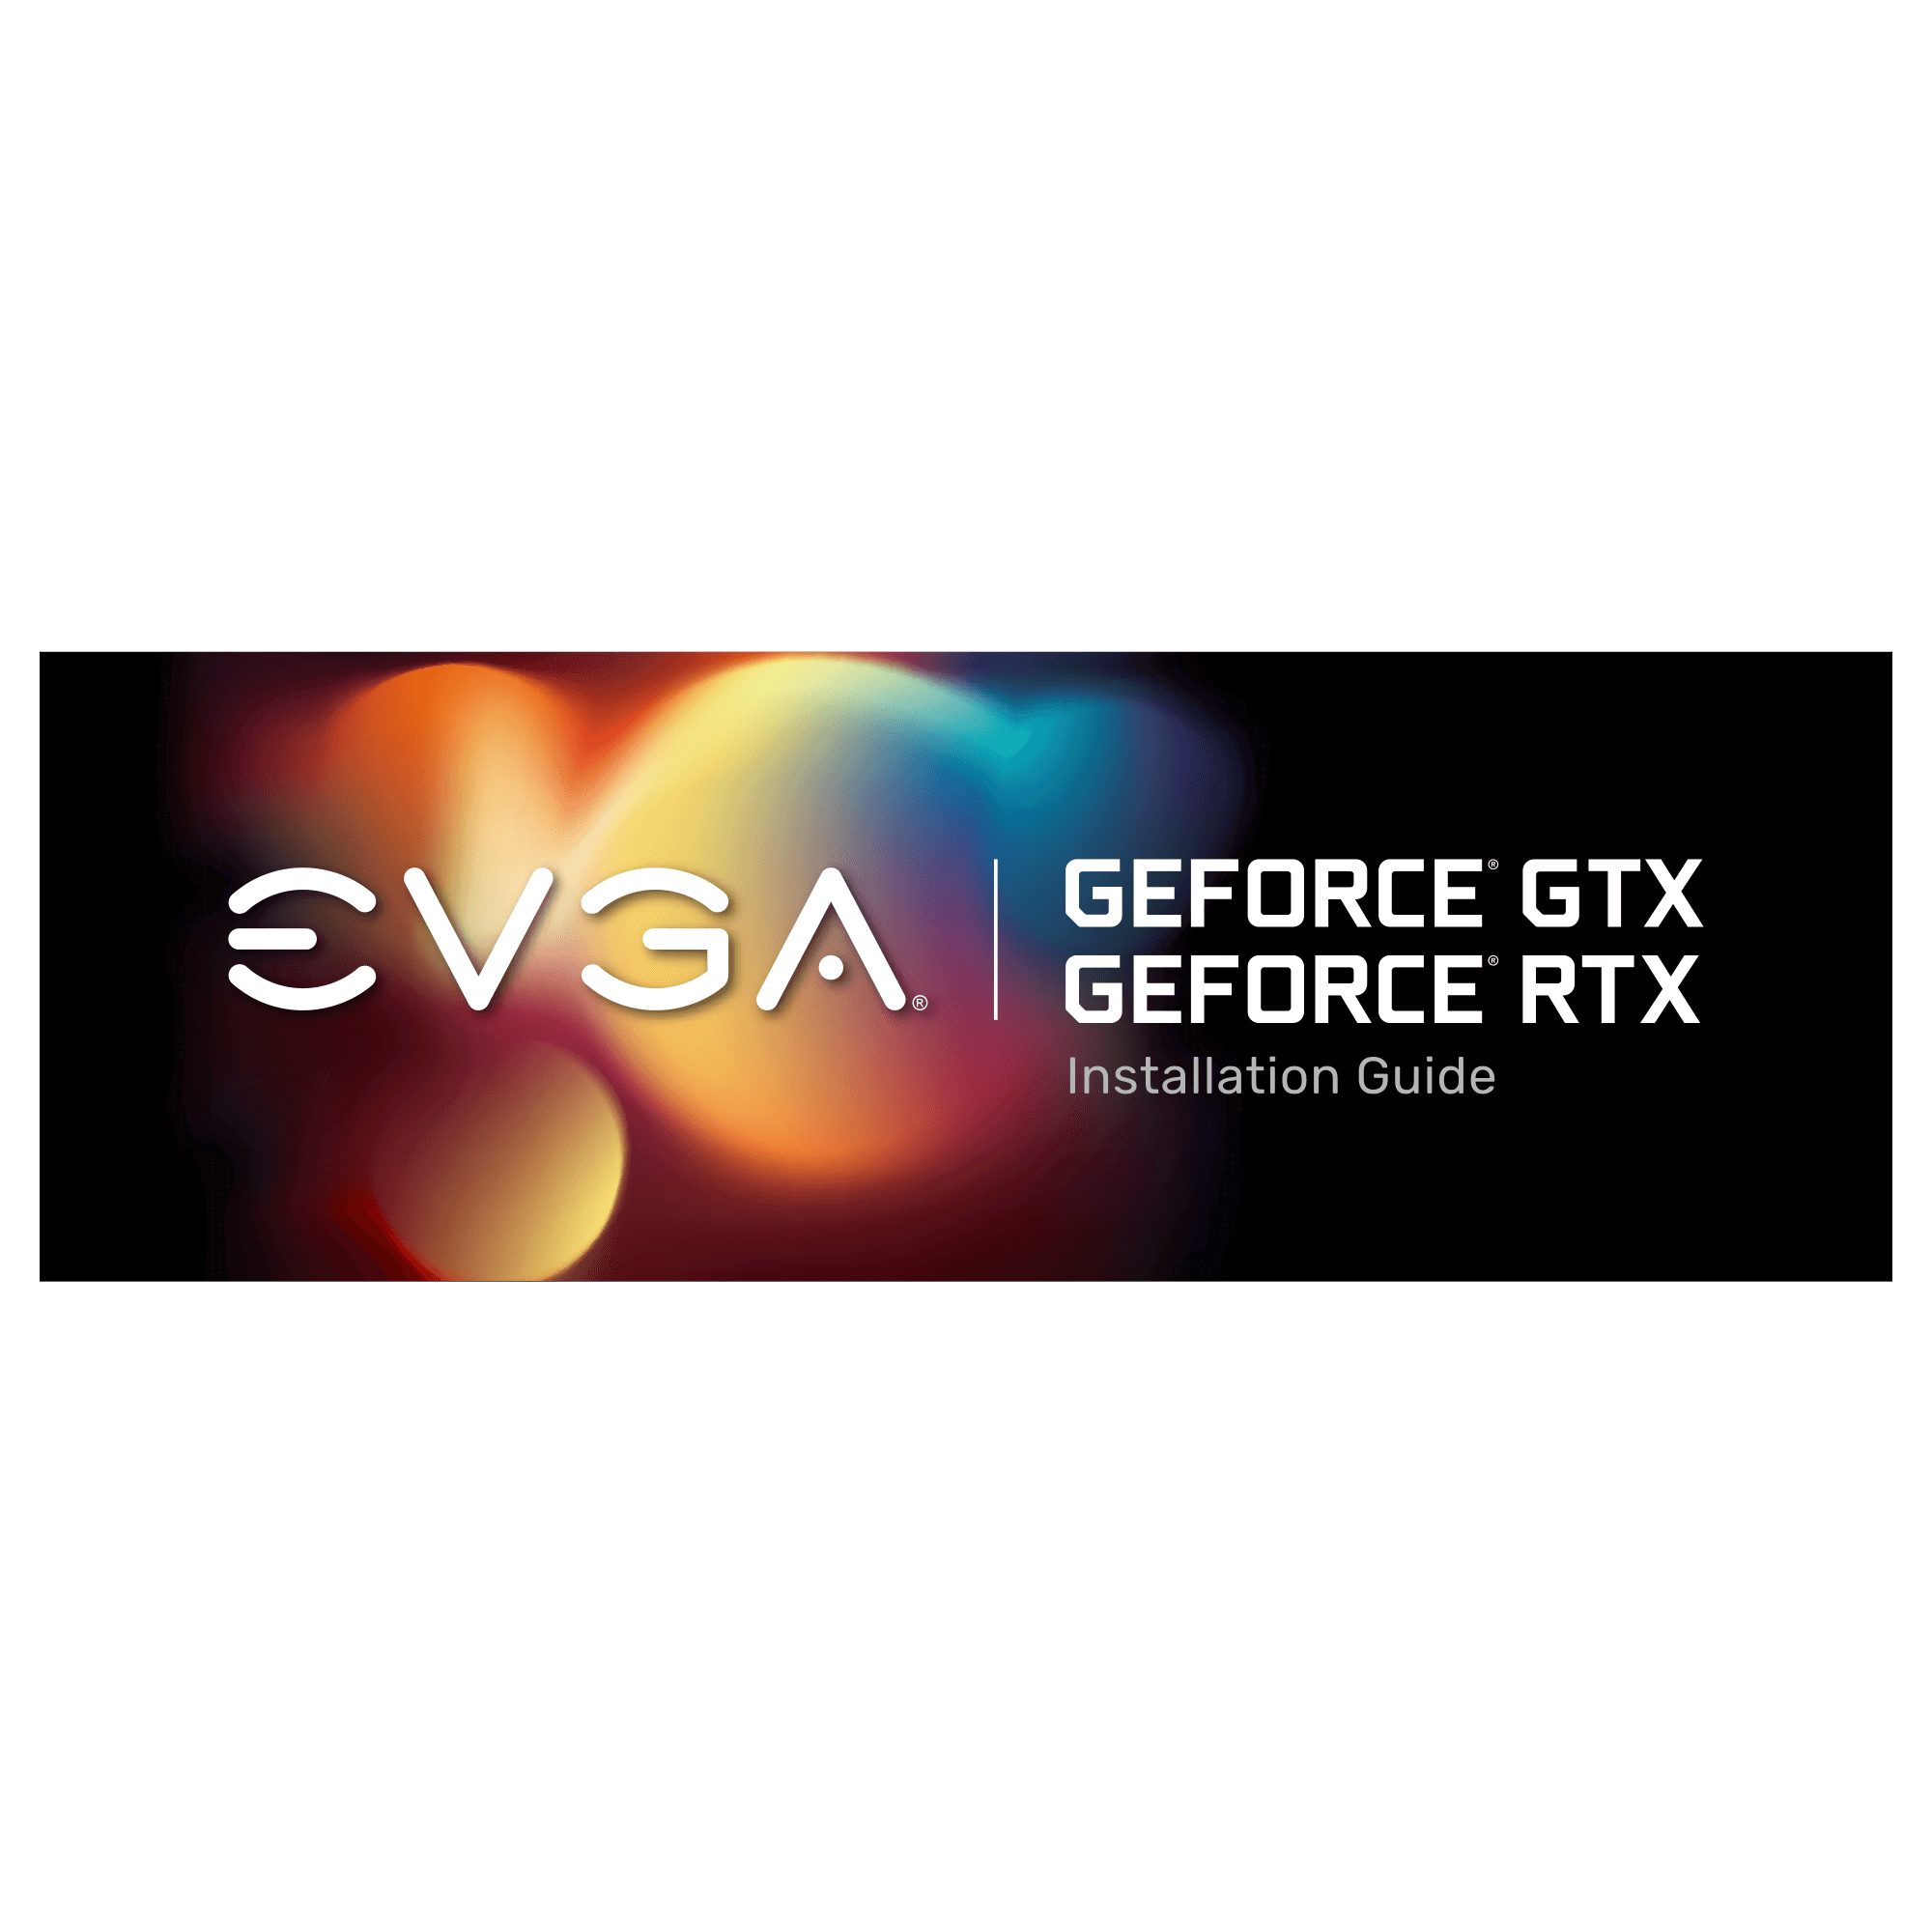 EVGA - Products - EVGA GeForce RTX 3070 Ti FTW3 ULTRA GAMING, 08G 